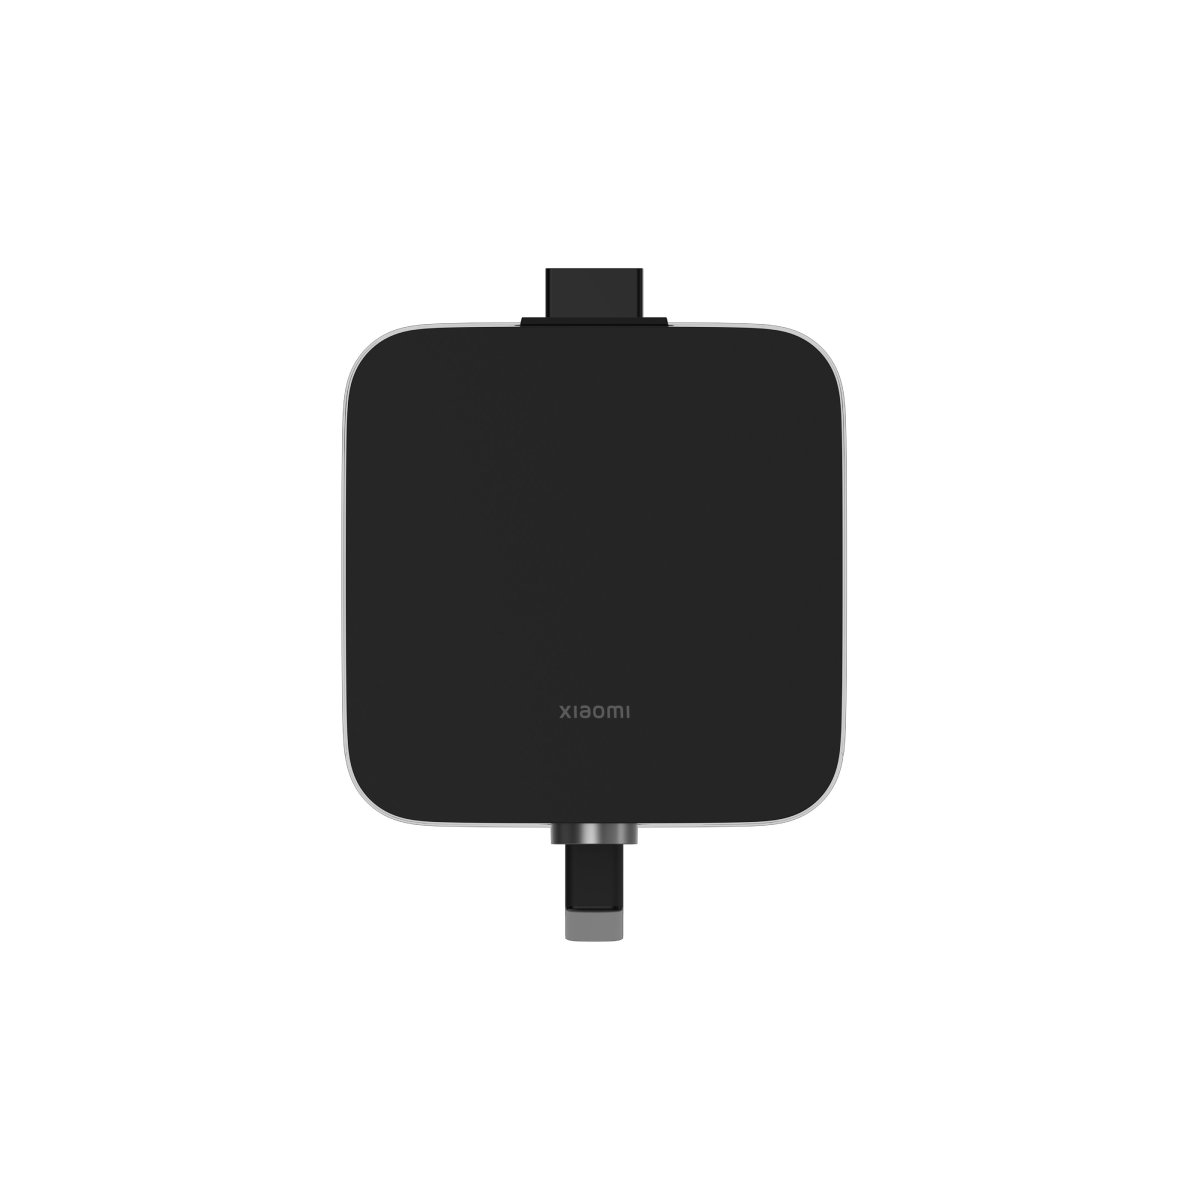 Xiaomi Smart Air Fryer 6.5L (Black), , large image number 6